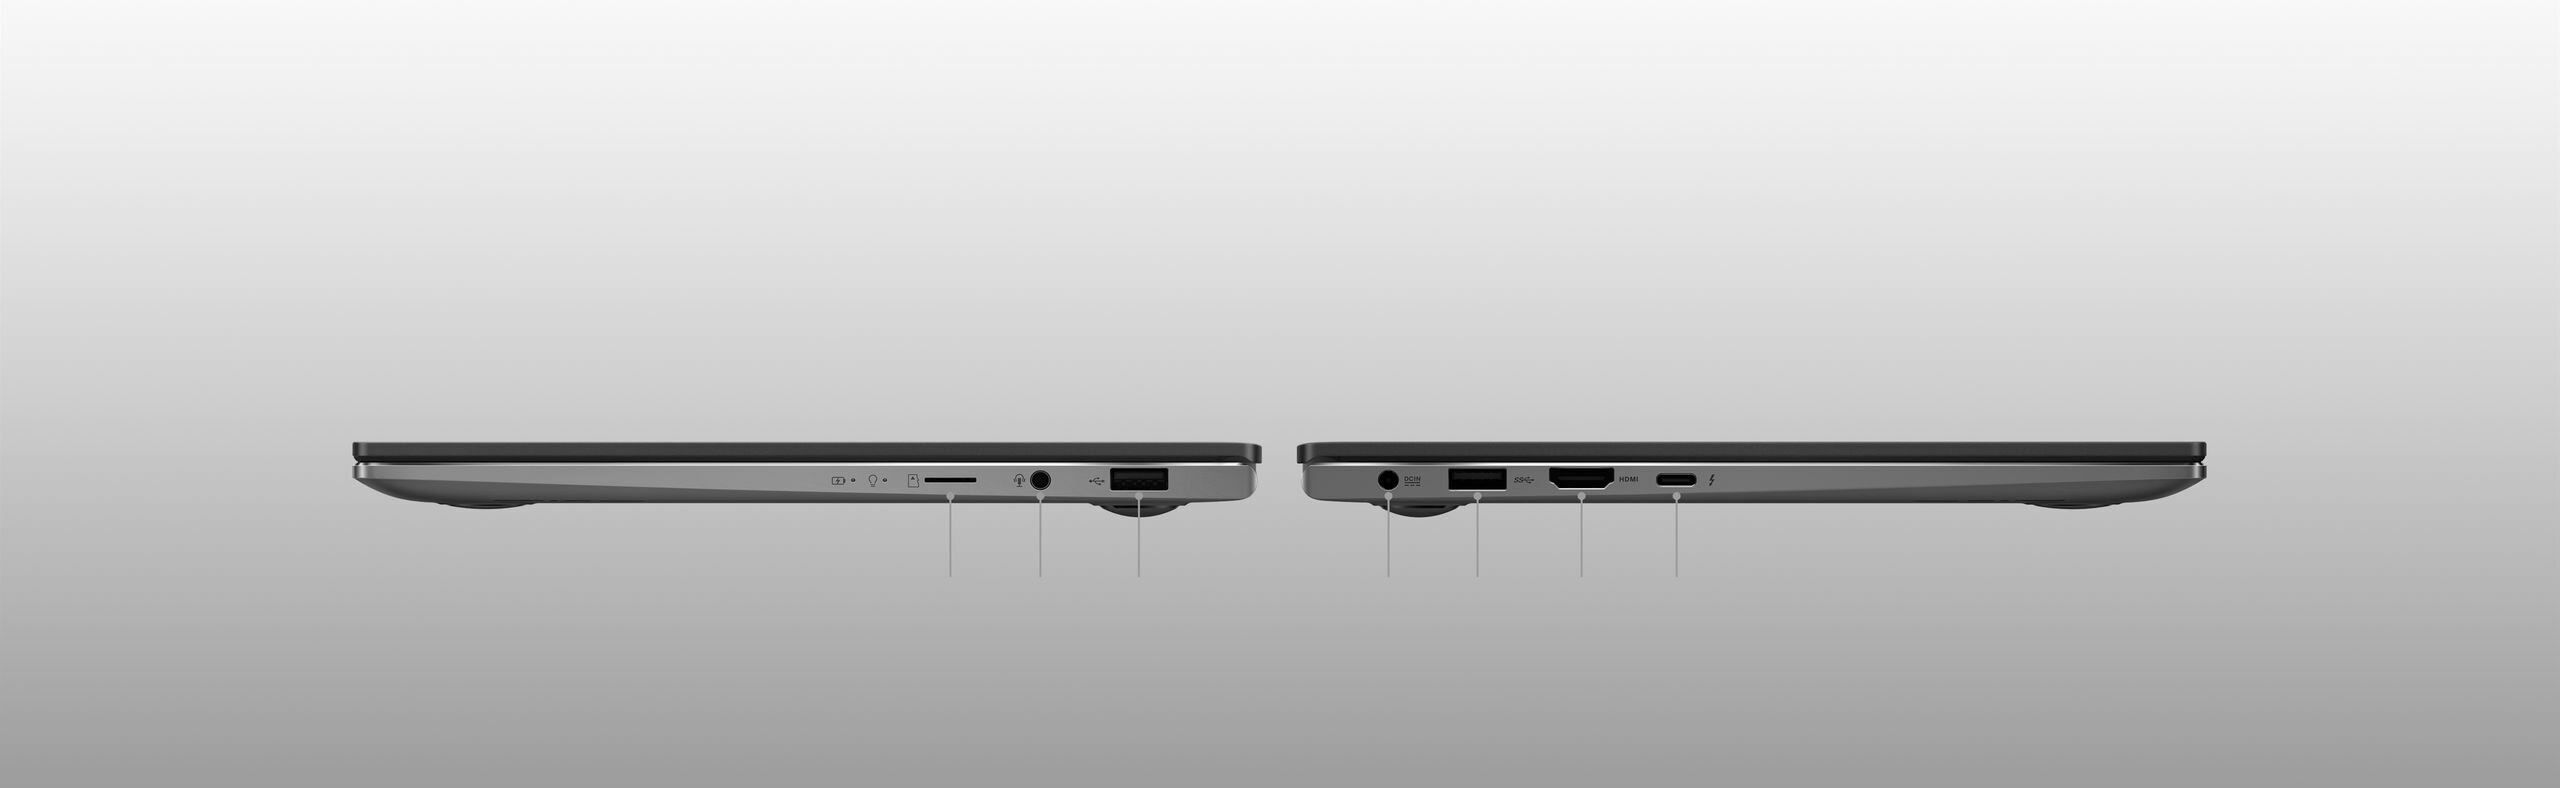 Laptop ASUS VivoBook S13 S333EA-EG018 czarny widok na dostępne po obu stronach laptopa porty